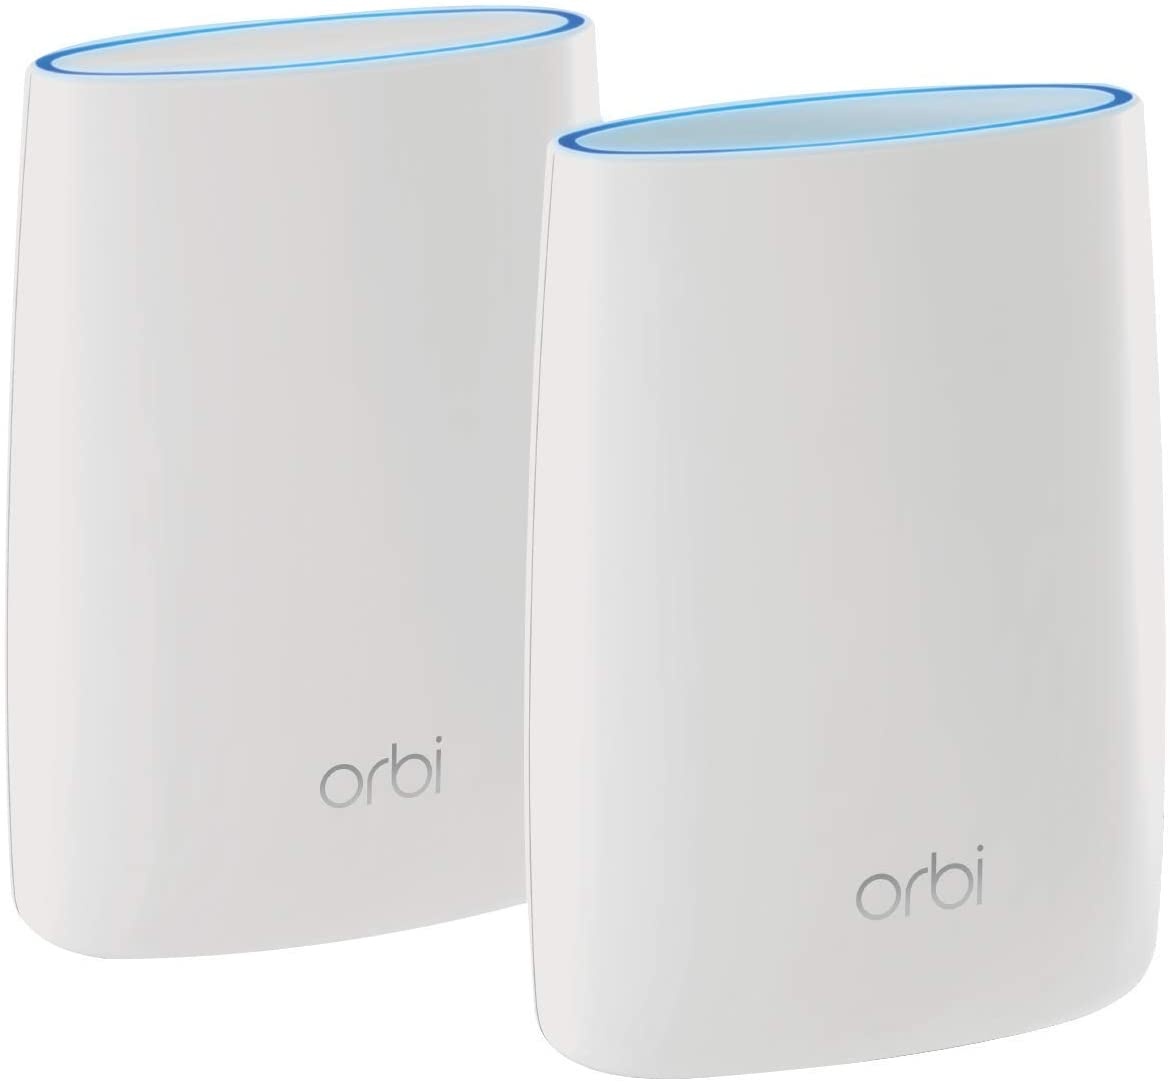 netgear orbi wifi system (rbk50) wifi router review